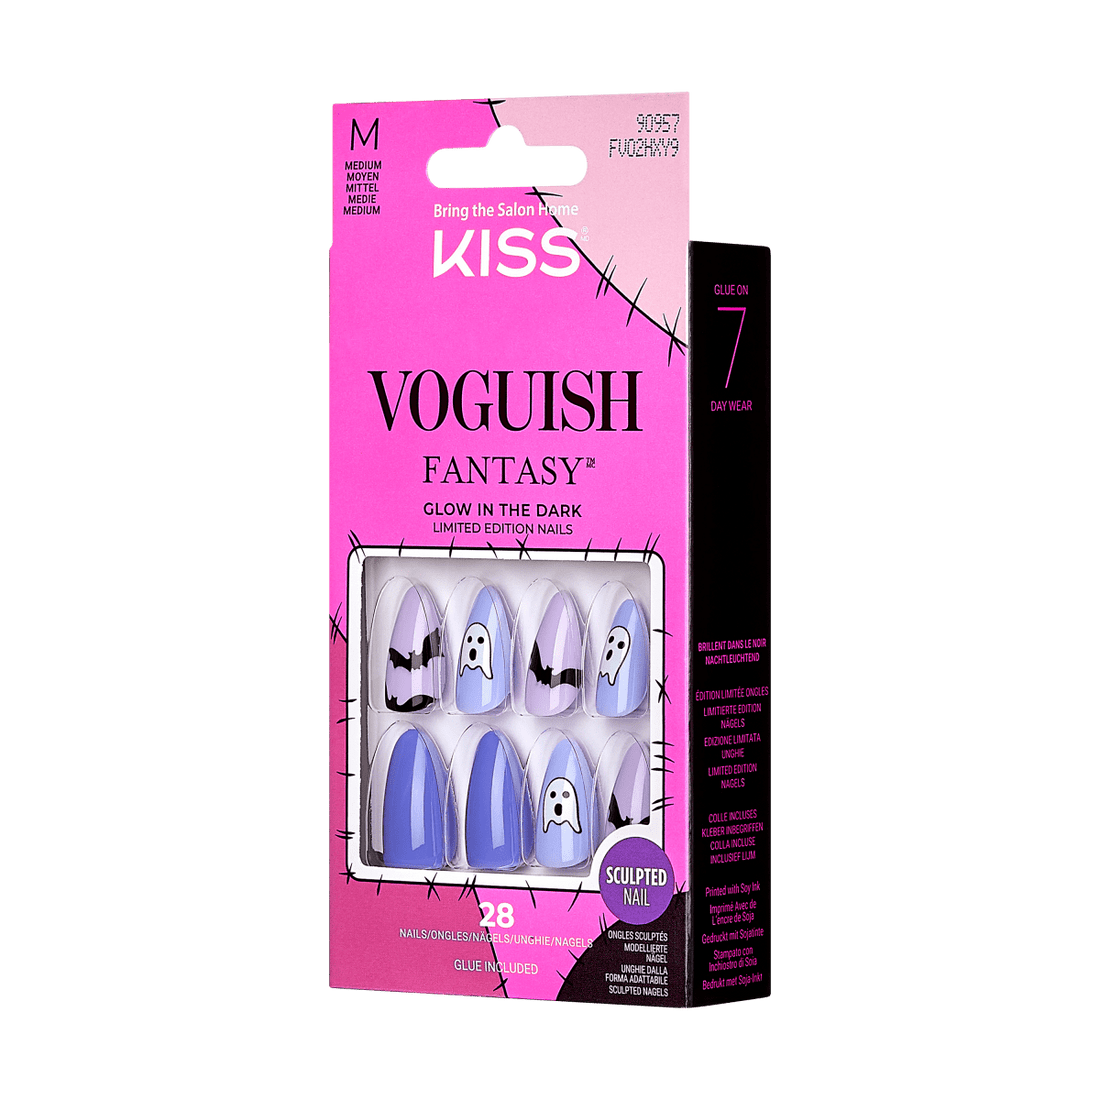 KISS Voguish Fantasy Halloween Nails - After midnight